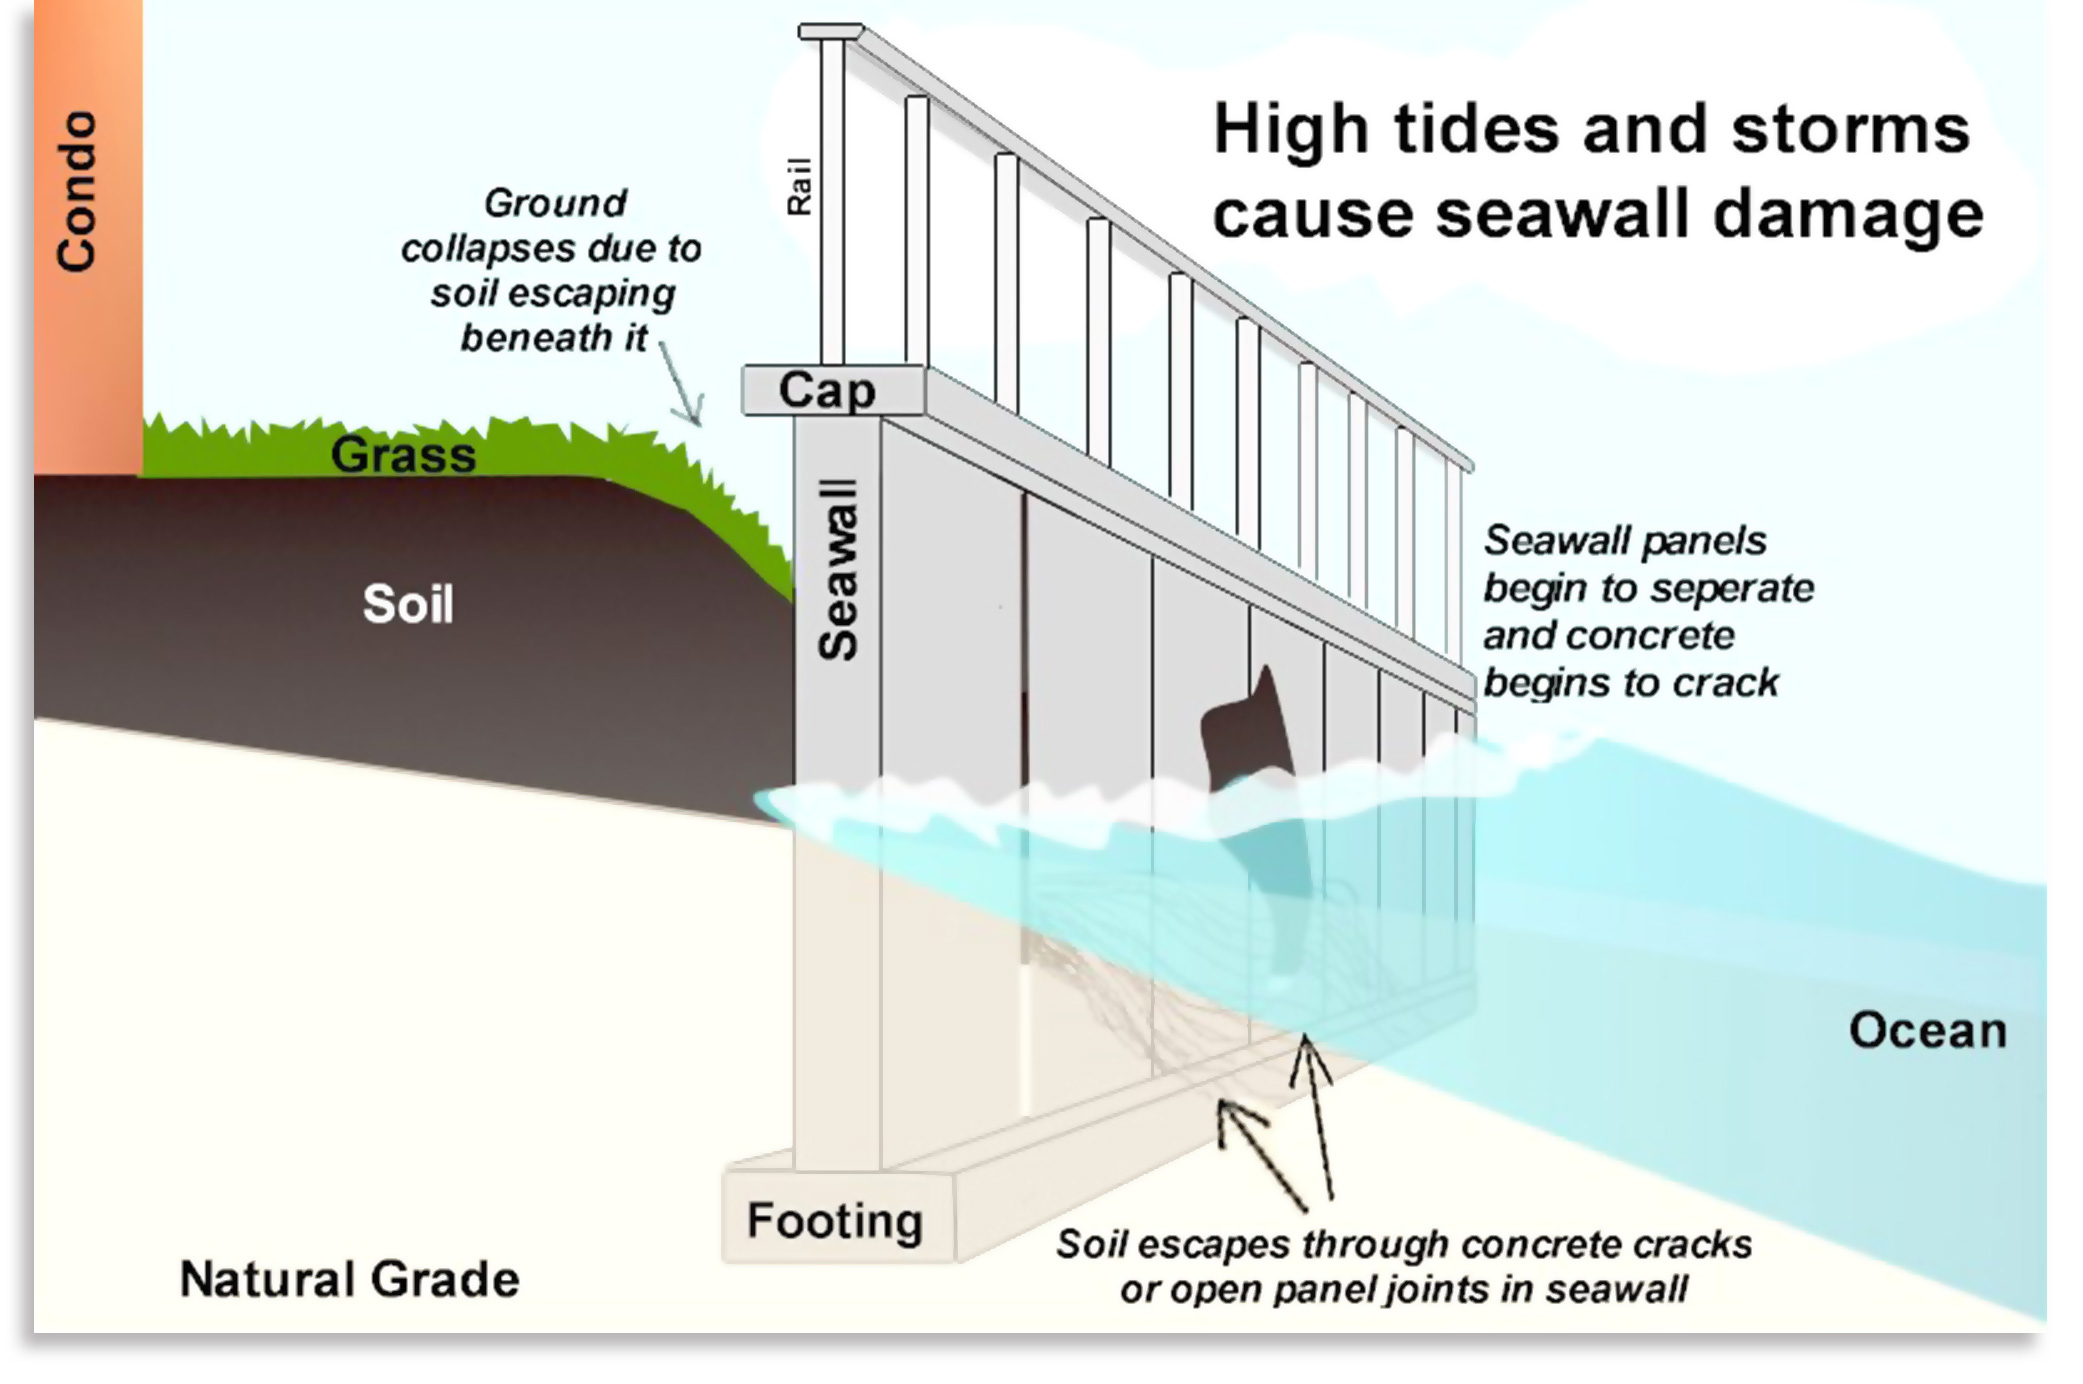 06-seawall-premier-environmental-solutions-florida-seawall-foundations.jpg